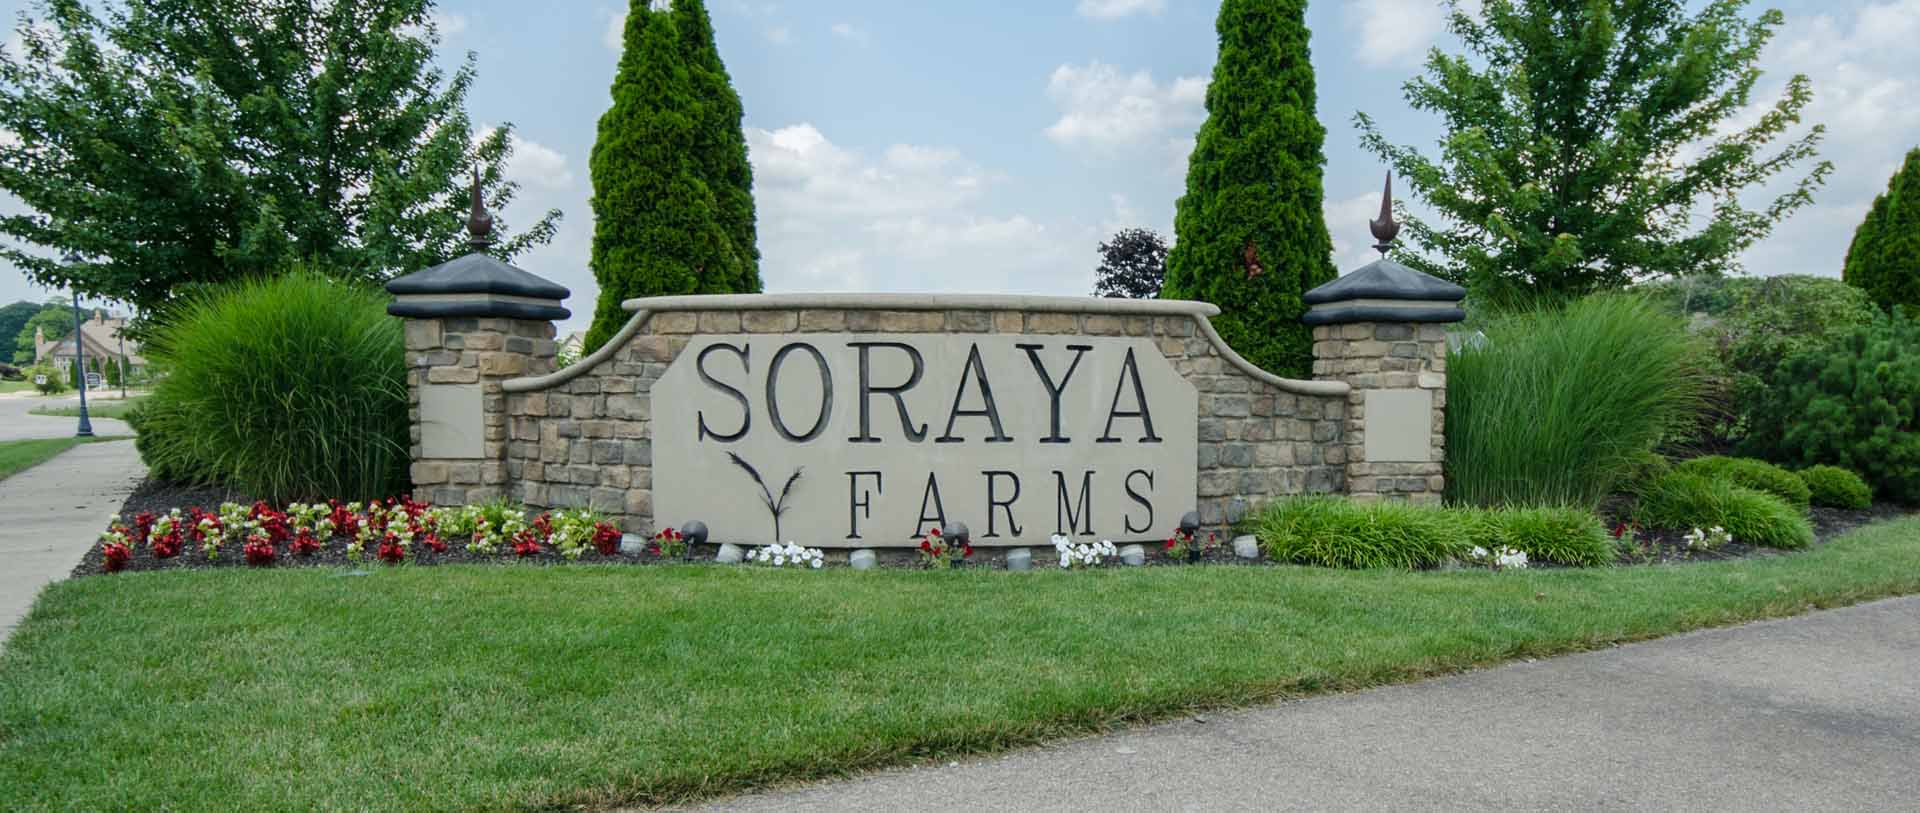 Design Homes Soraya Farms entrance sign